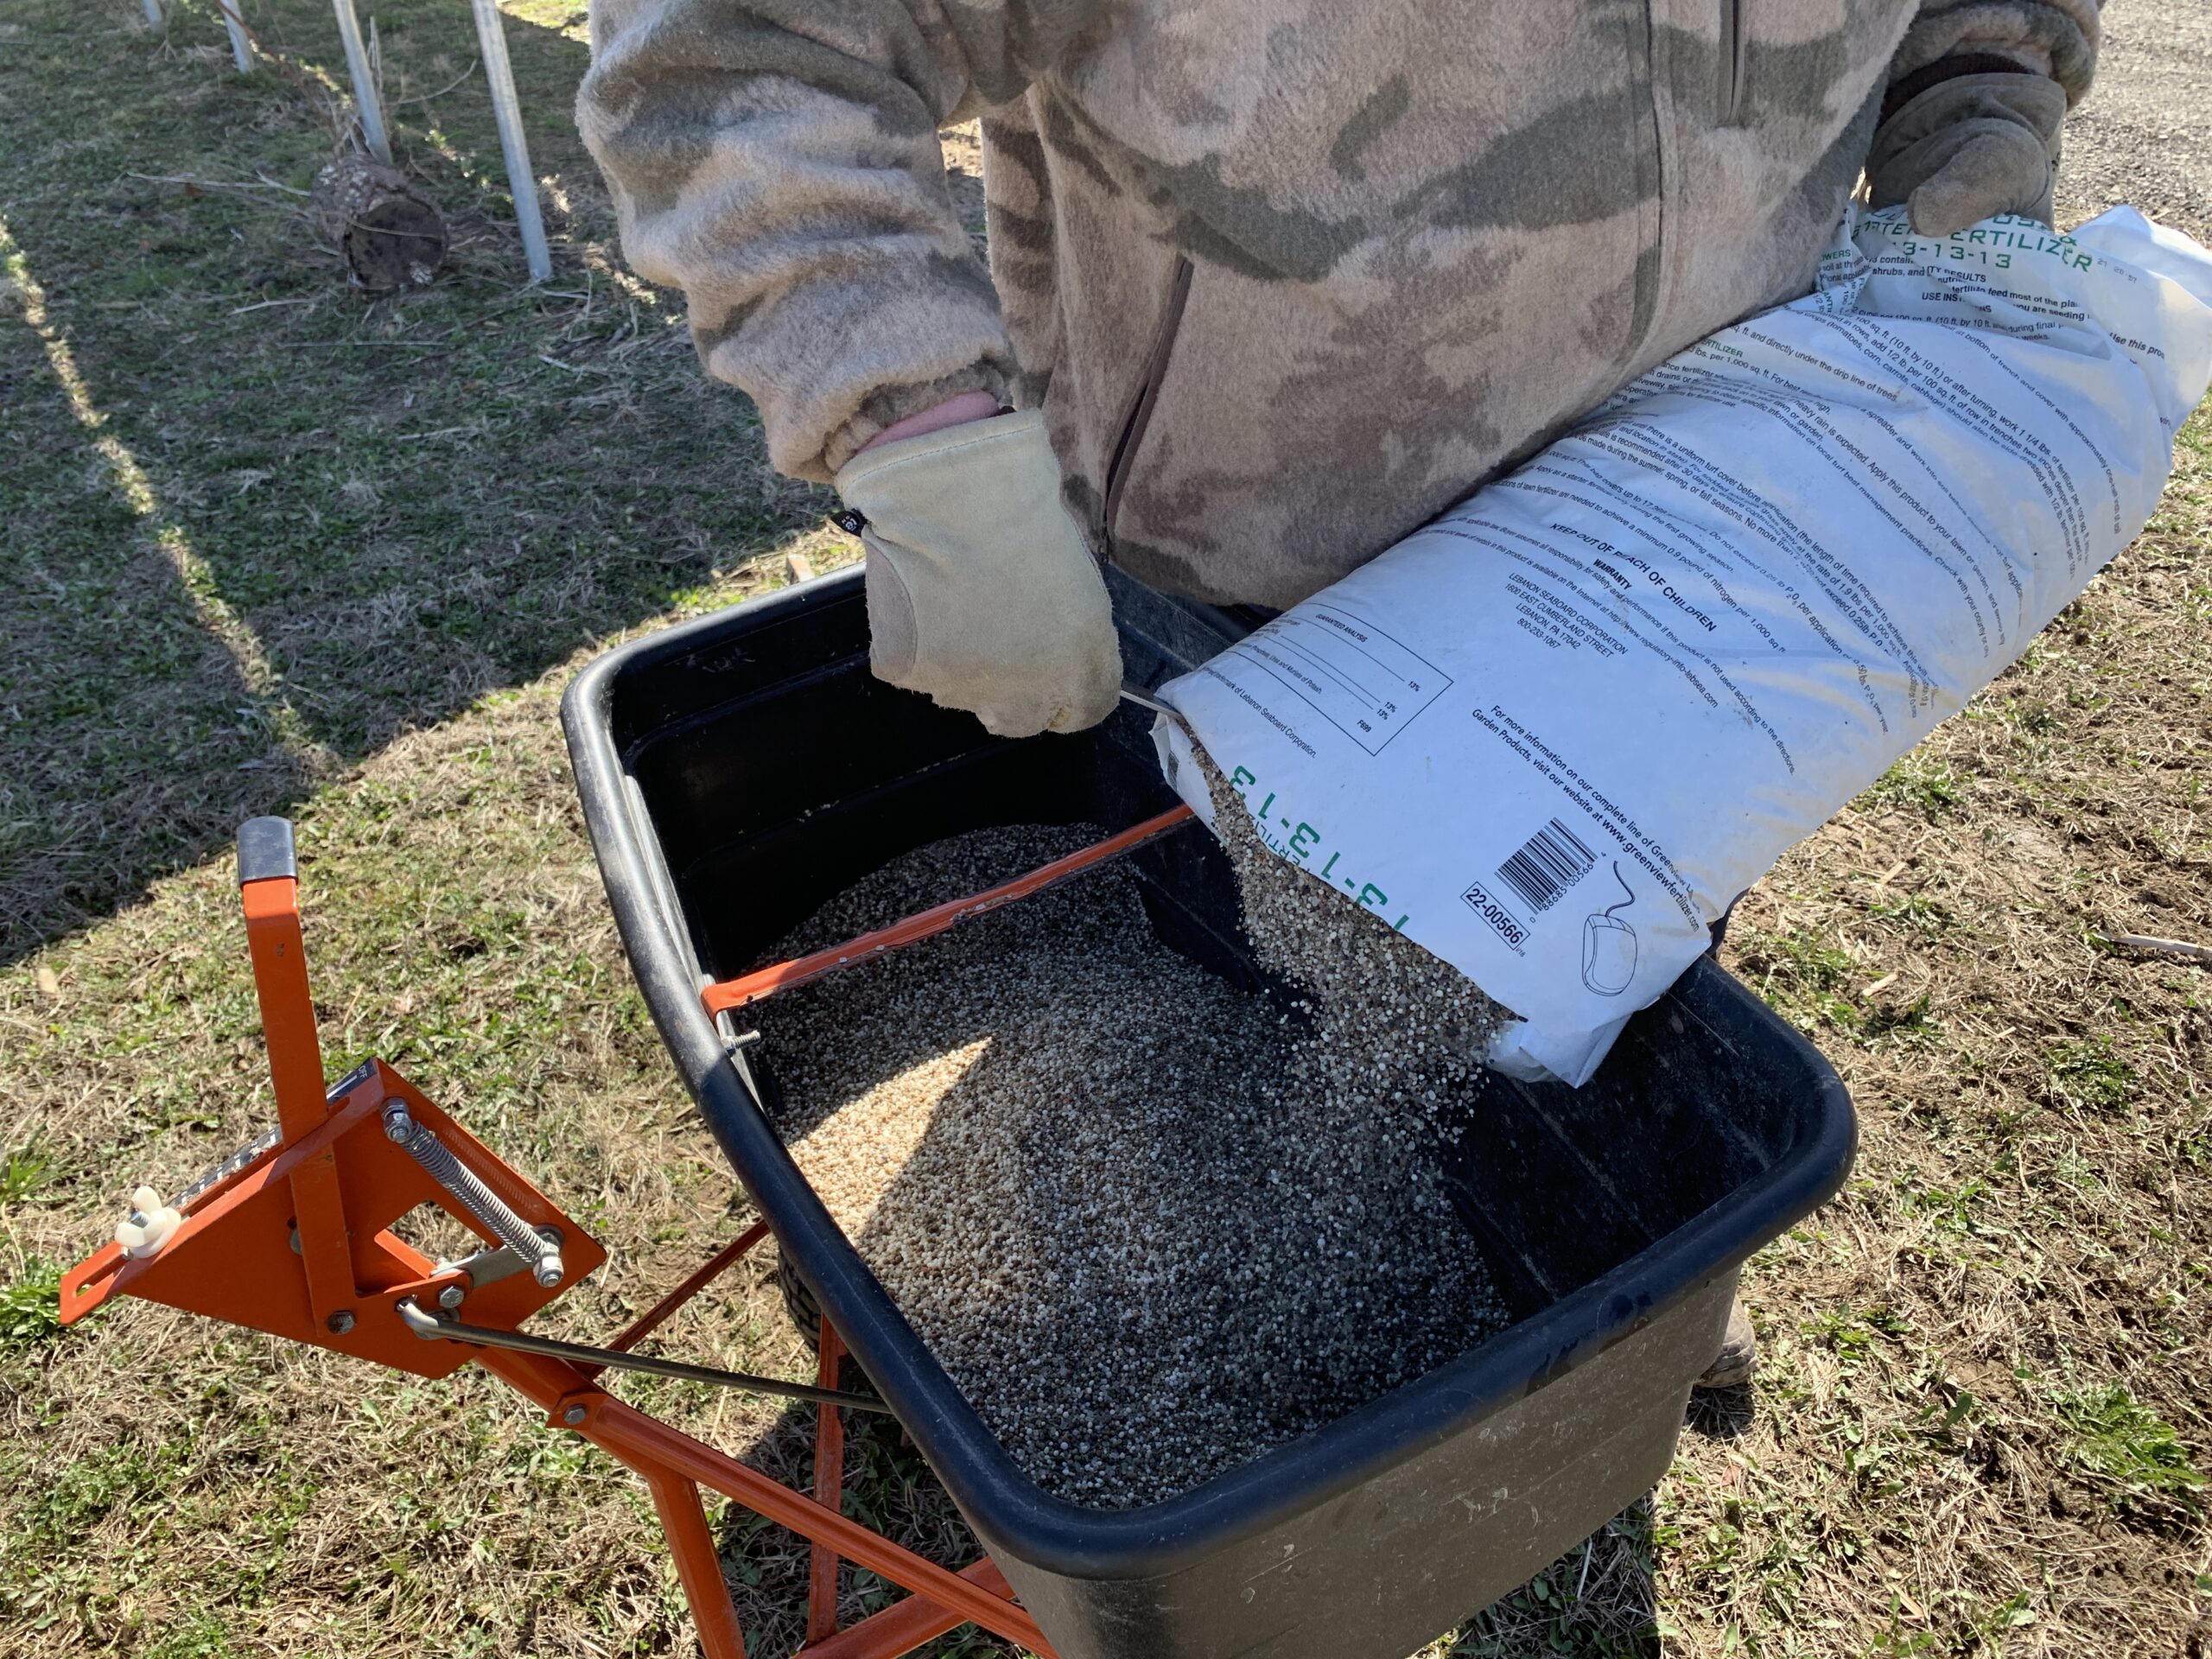 Add fertilizer to the soil to add nutirients.